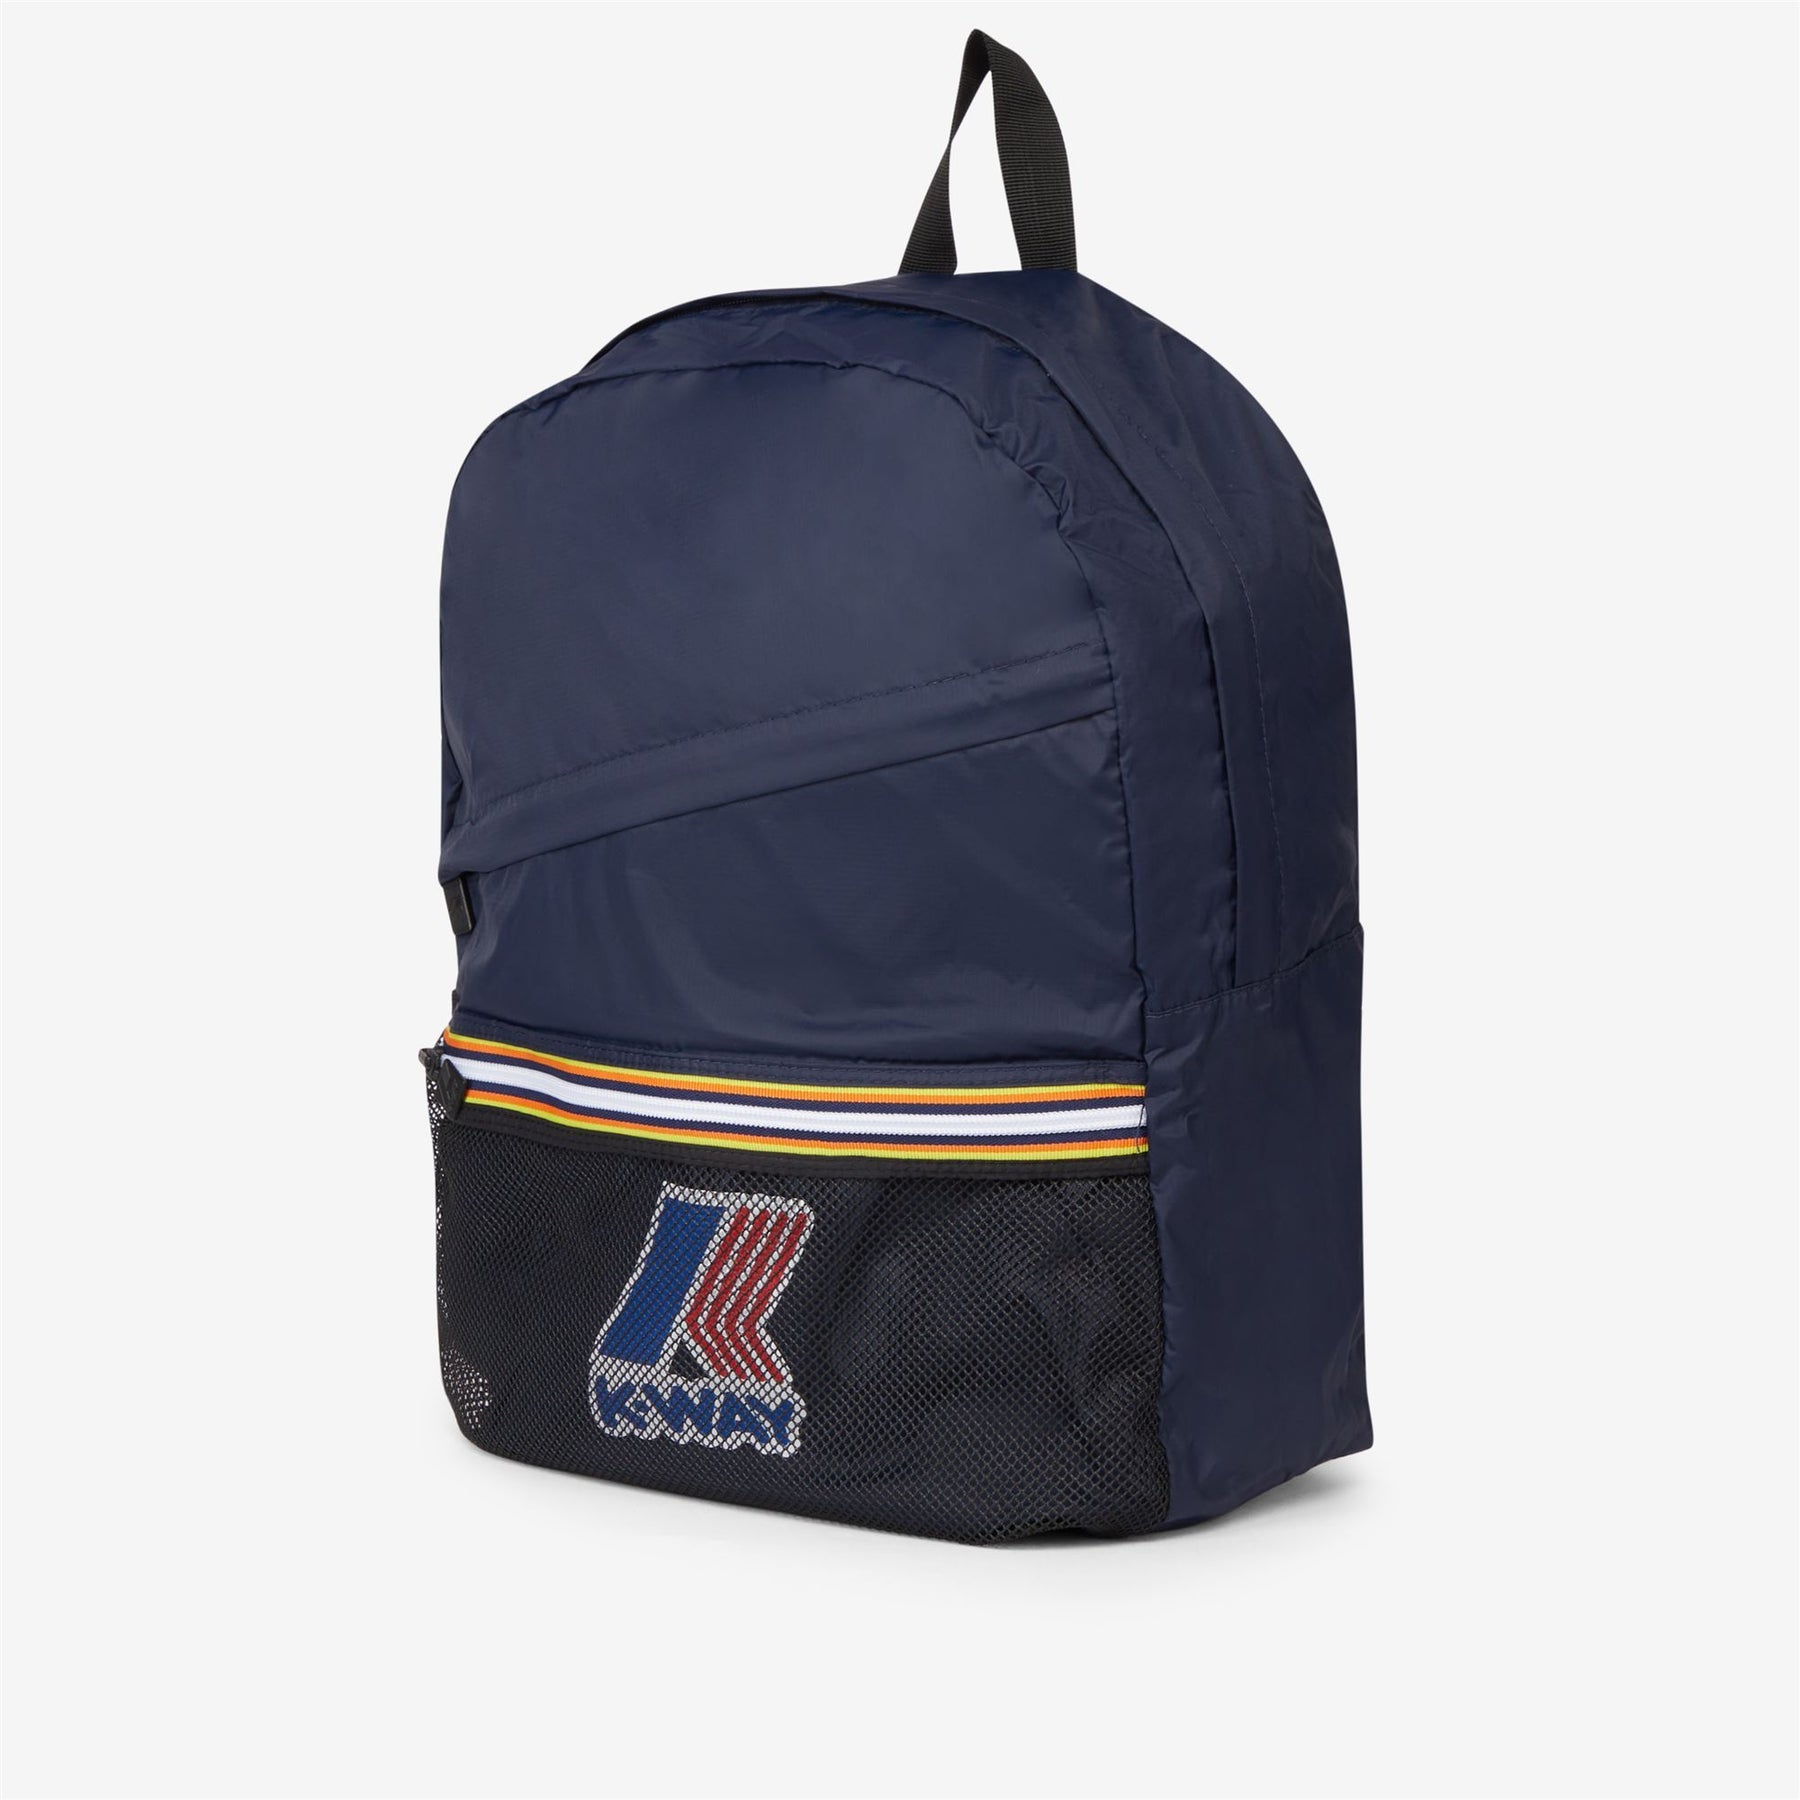 Francois - Packable Ripstop Backpack in Blue Depht